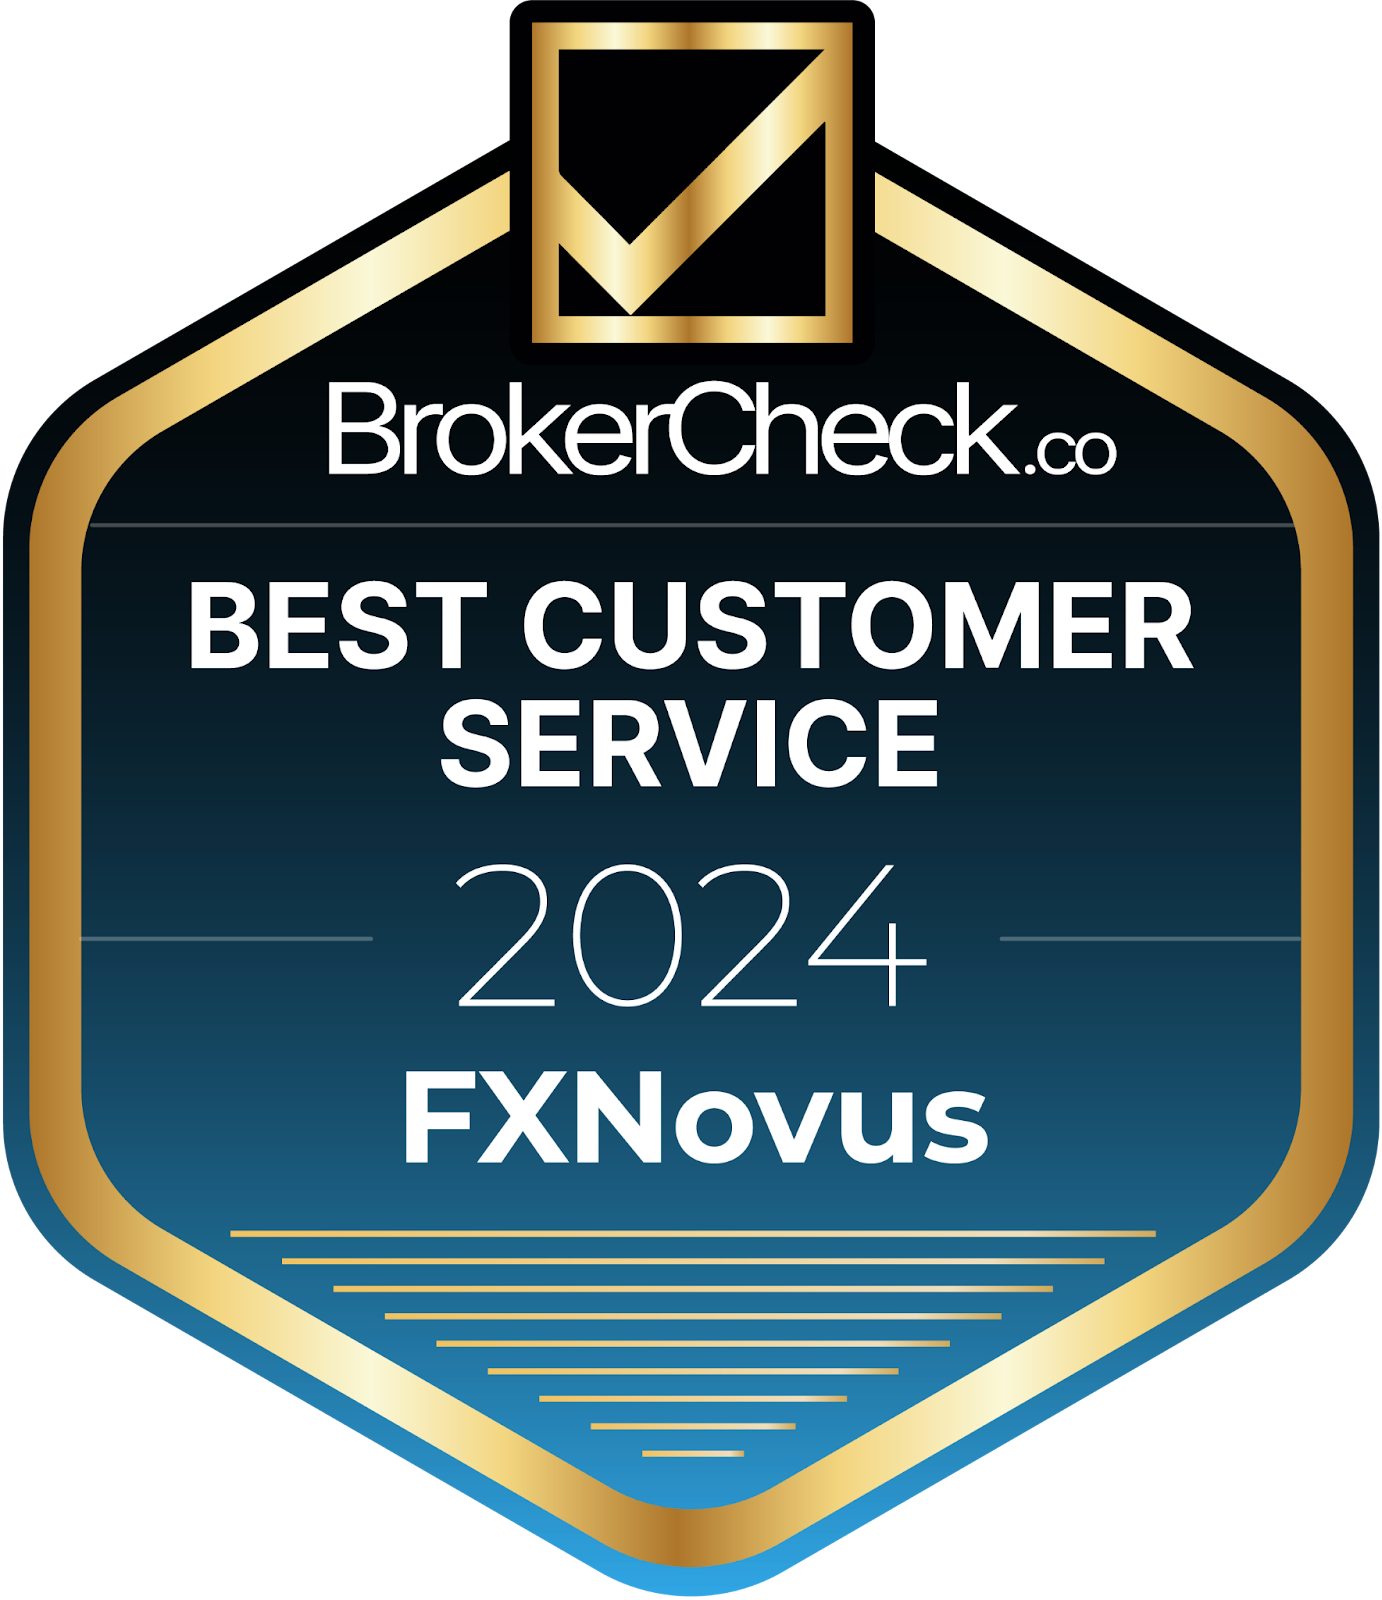 FXNovus earned the prestigious BrokerCheck Award for "Best Customer Service 2024."